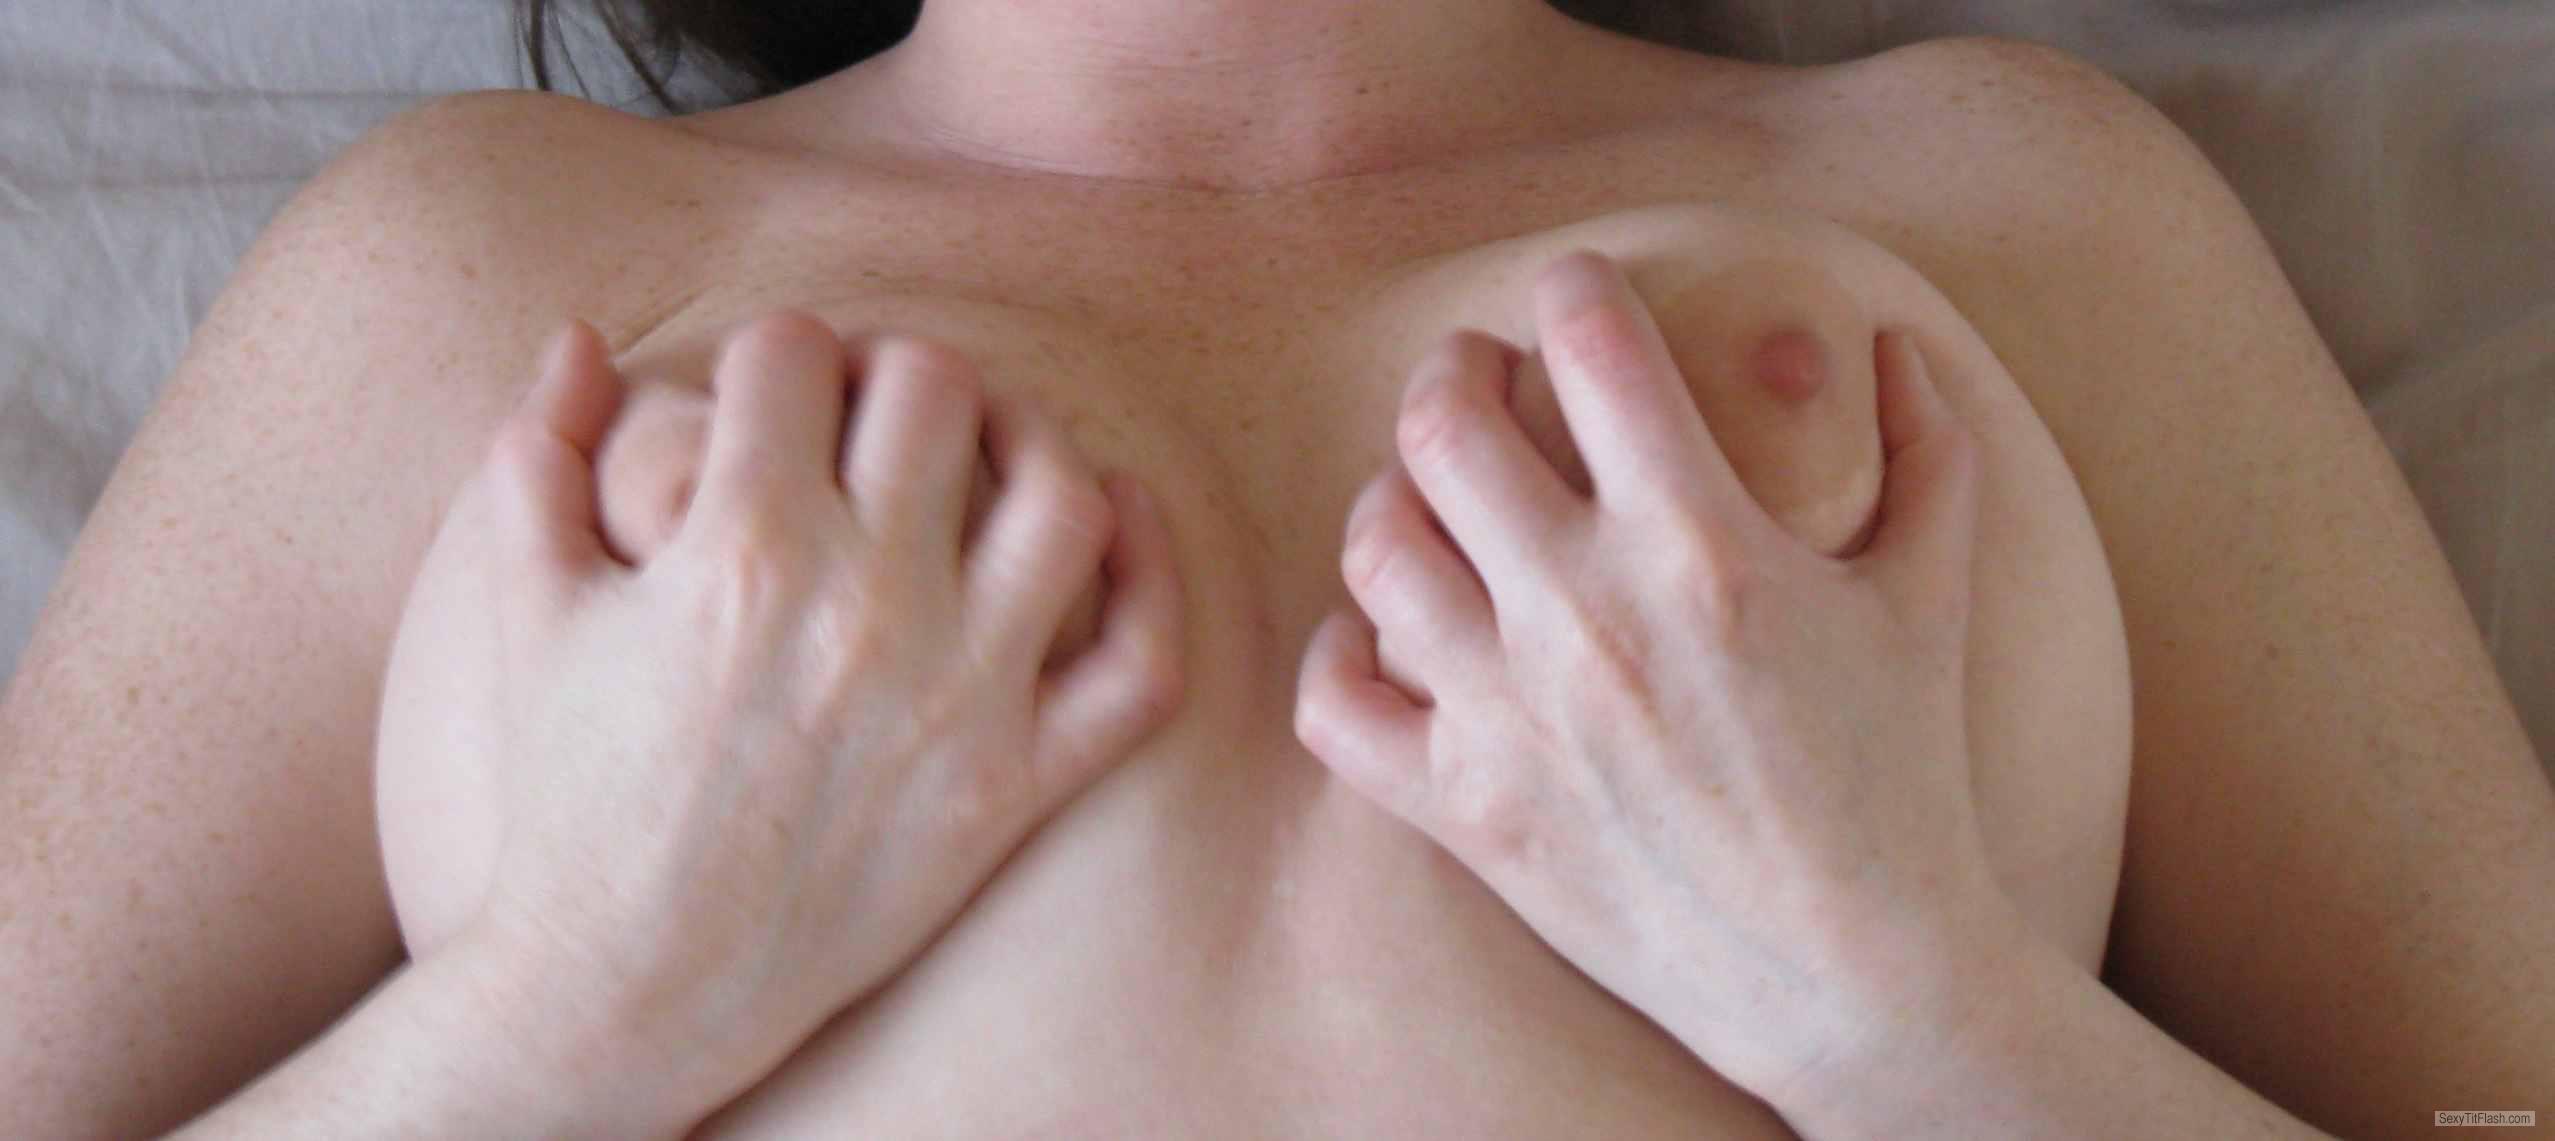 Tit Flash: Wife's Medium Tits - Sara from United States